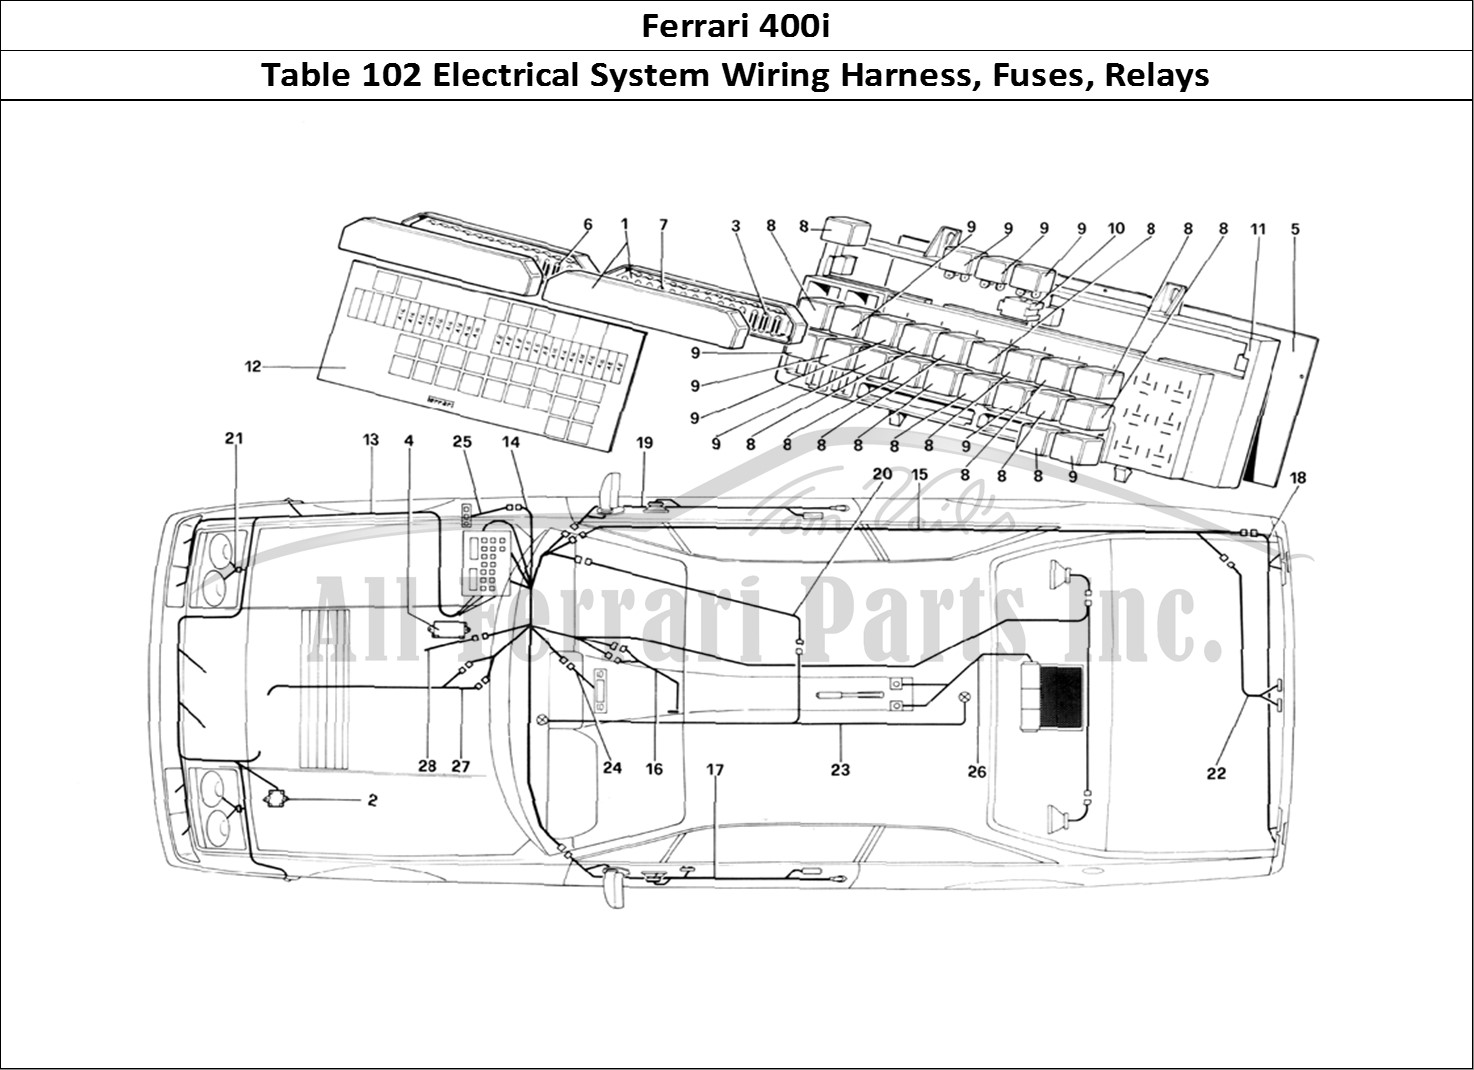 Ferrari Parts Ferrari 400i (1983 Mechanical) Page 102 Electrical System, Fuses